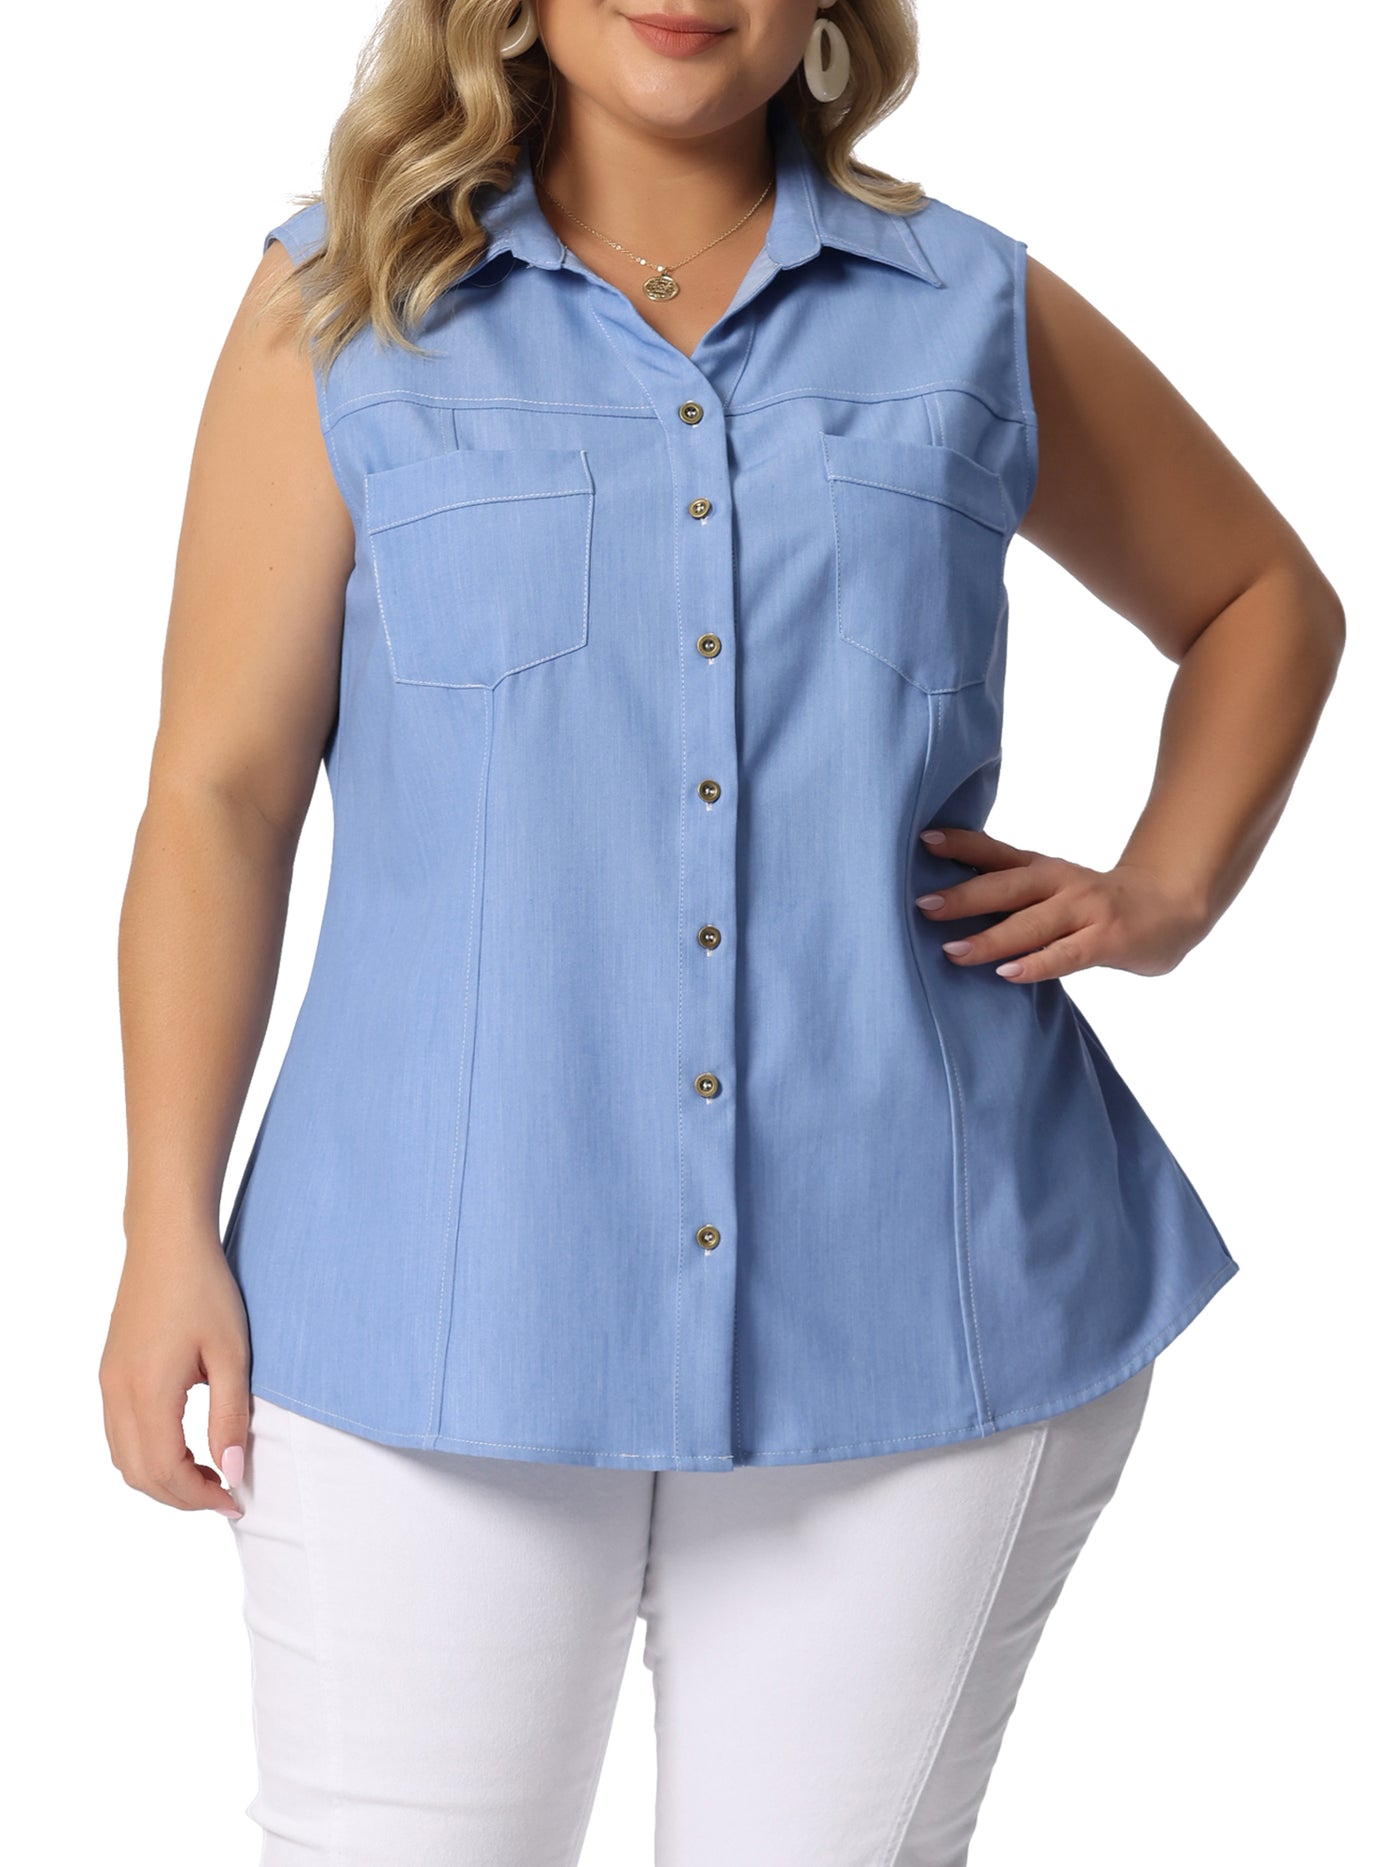 Bublédon Women's Plus Size Denim Shirt Sleeveless Front Pockets Chambray Shirts